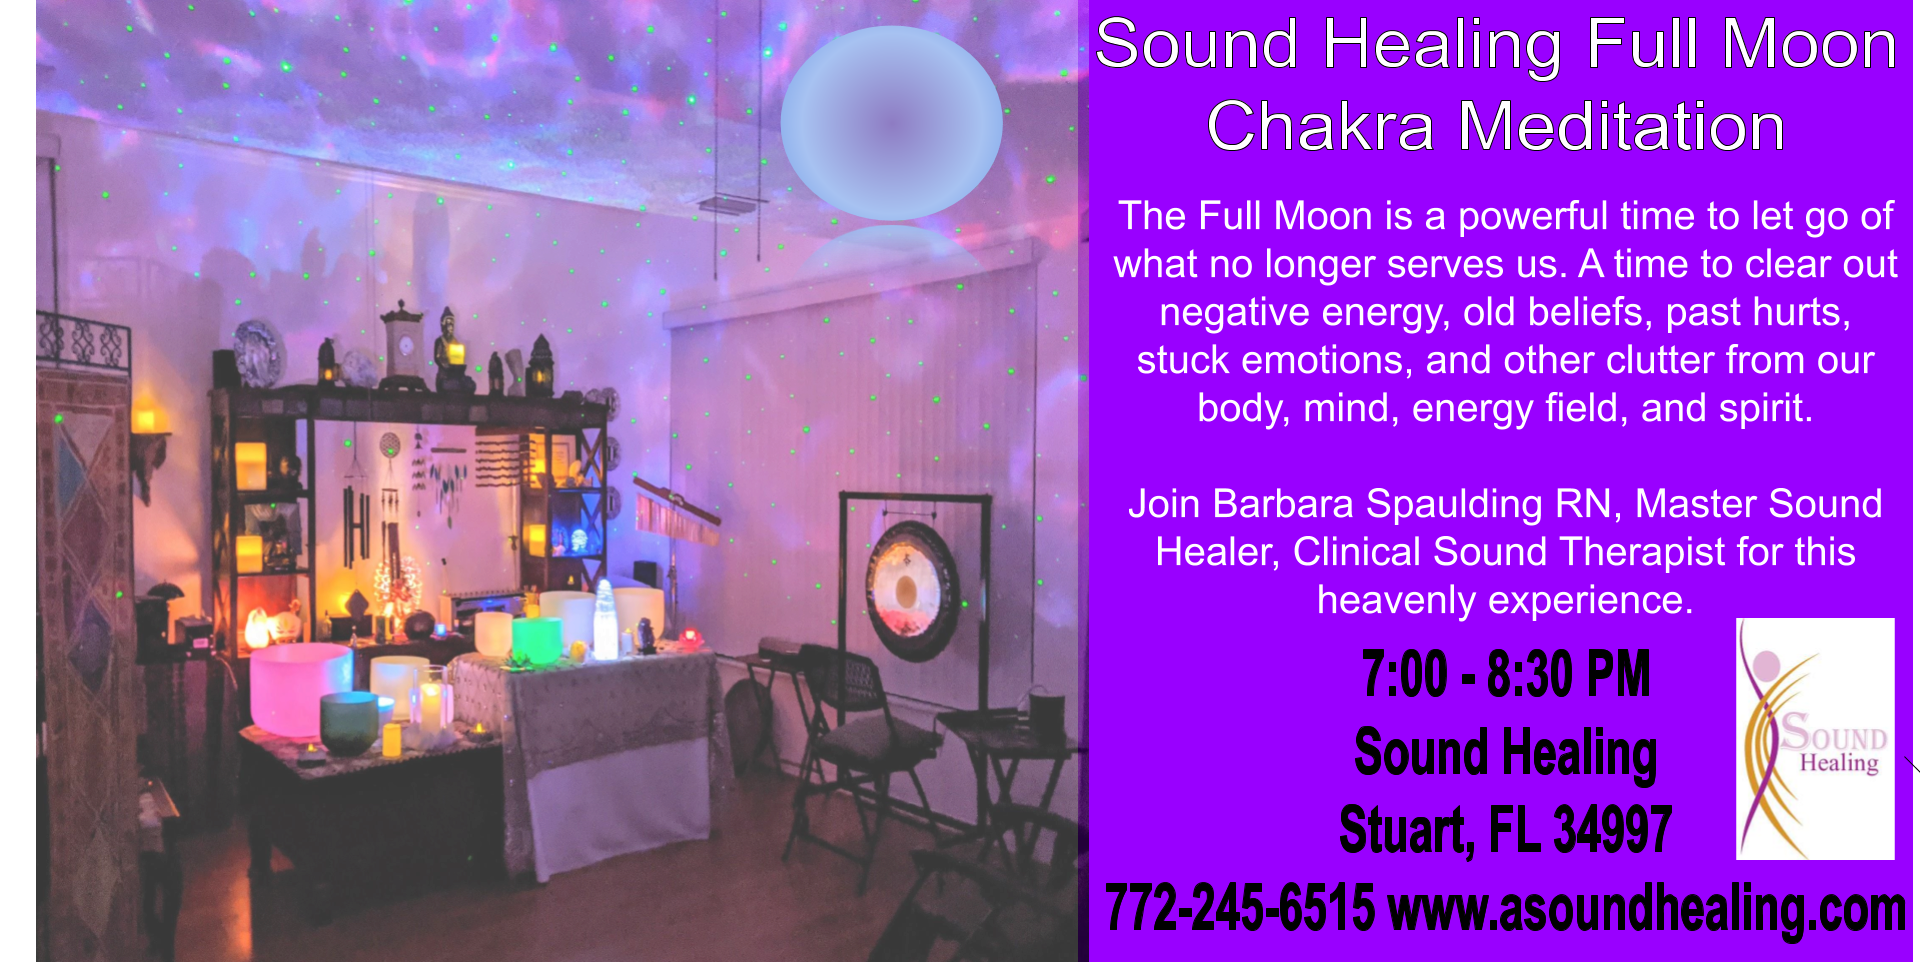 Sound Healing Full Moon Chakra Meditation promotional image